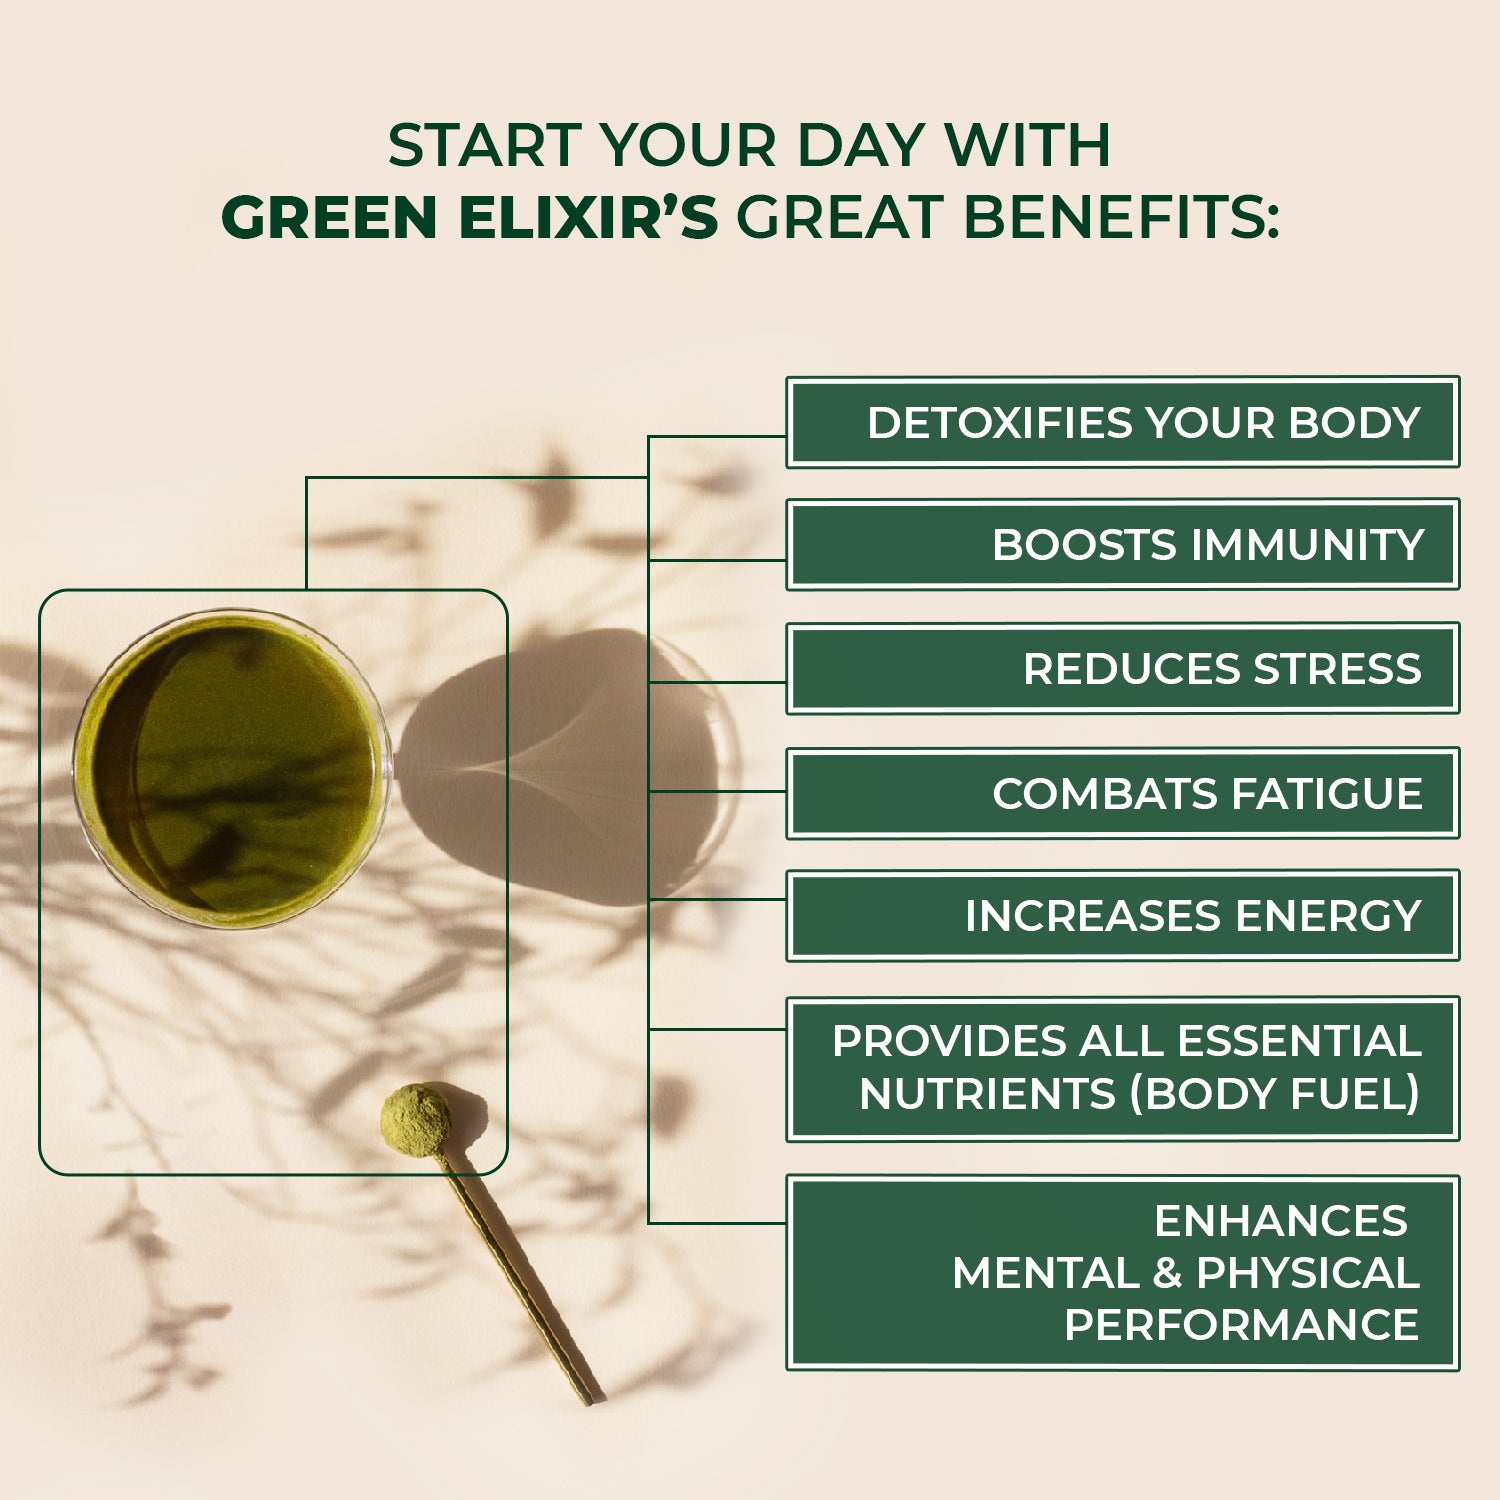 Green Elixir